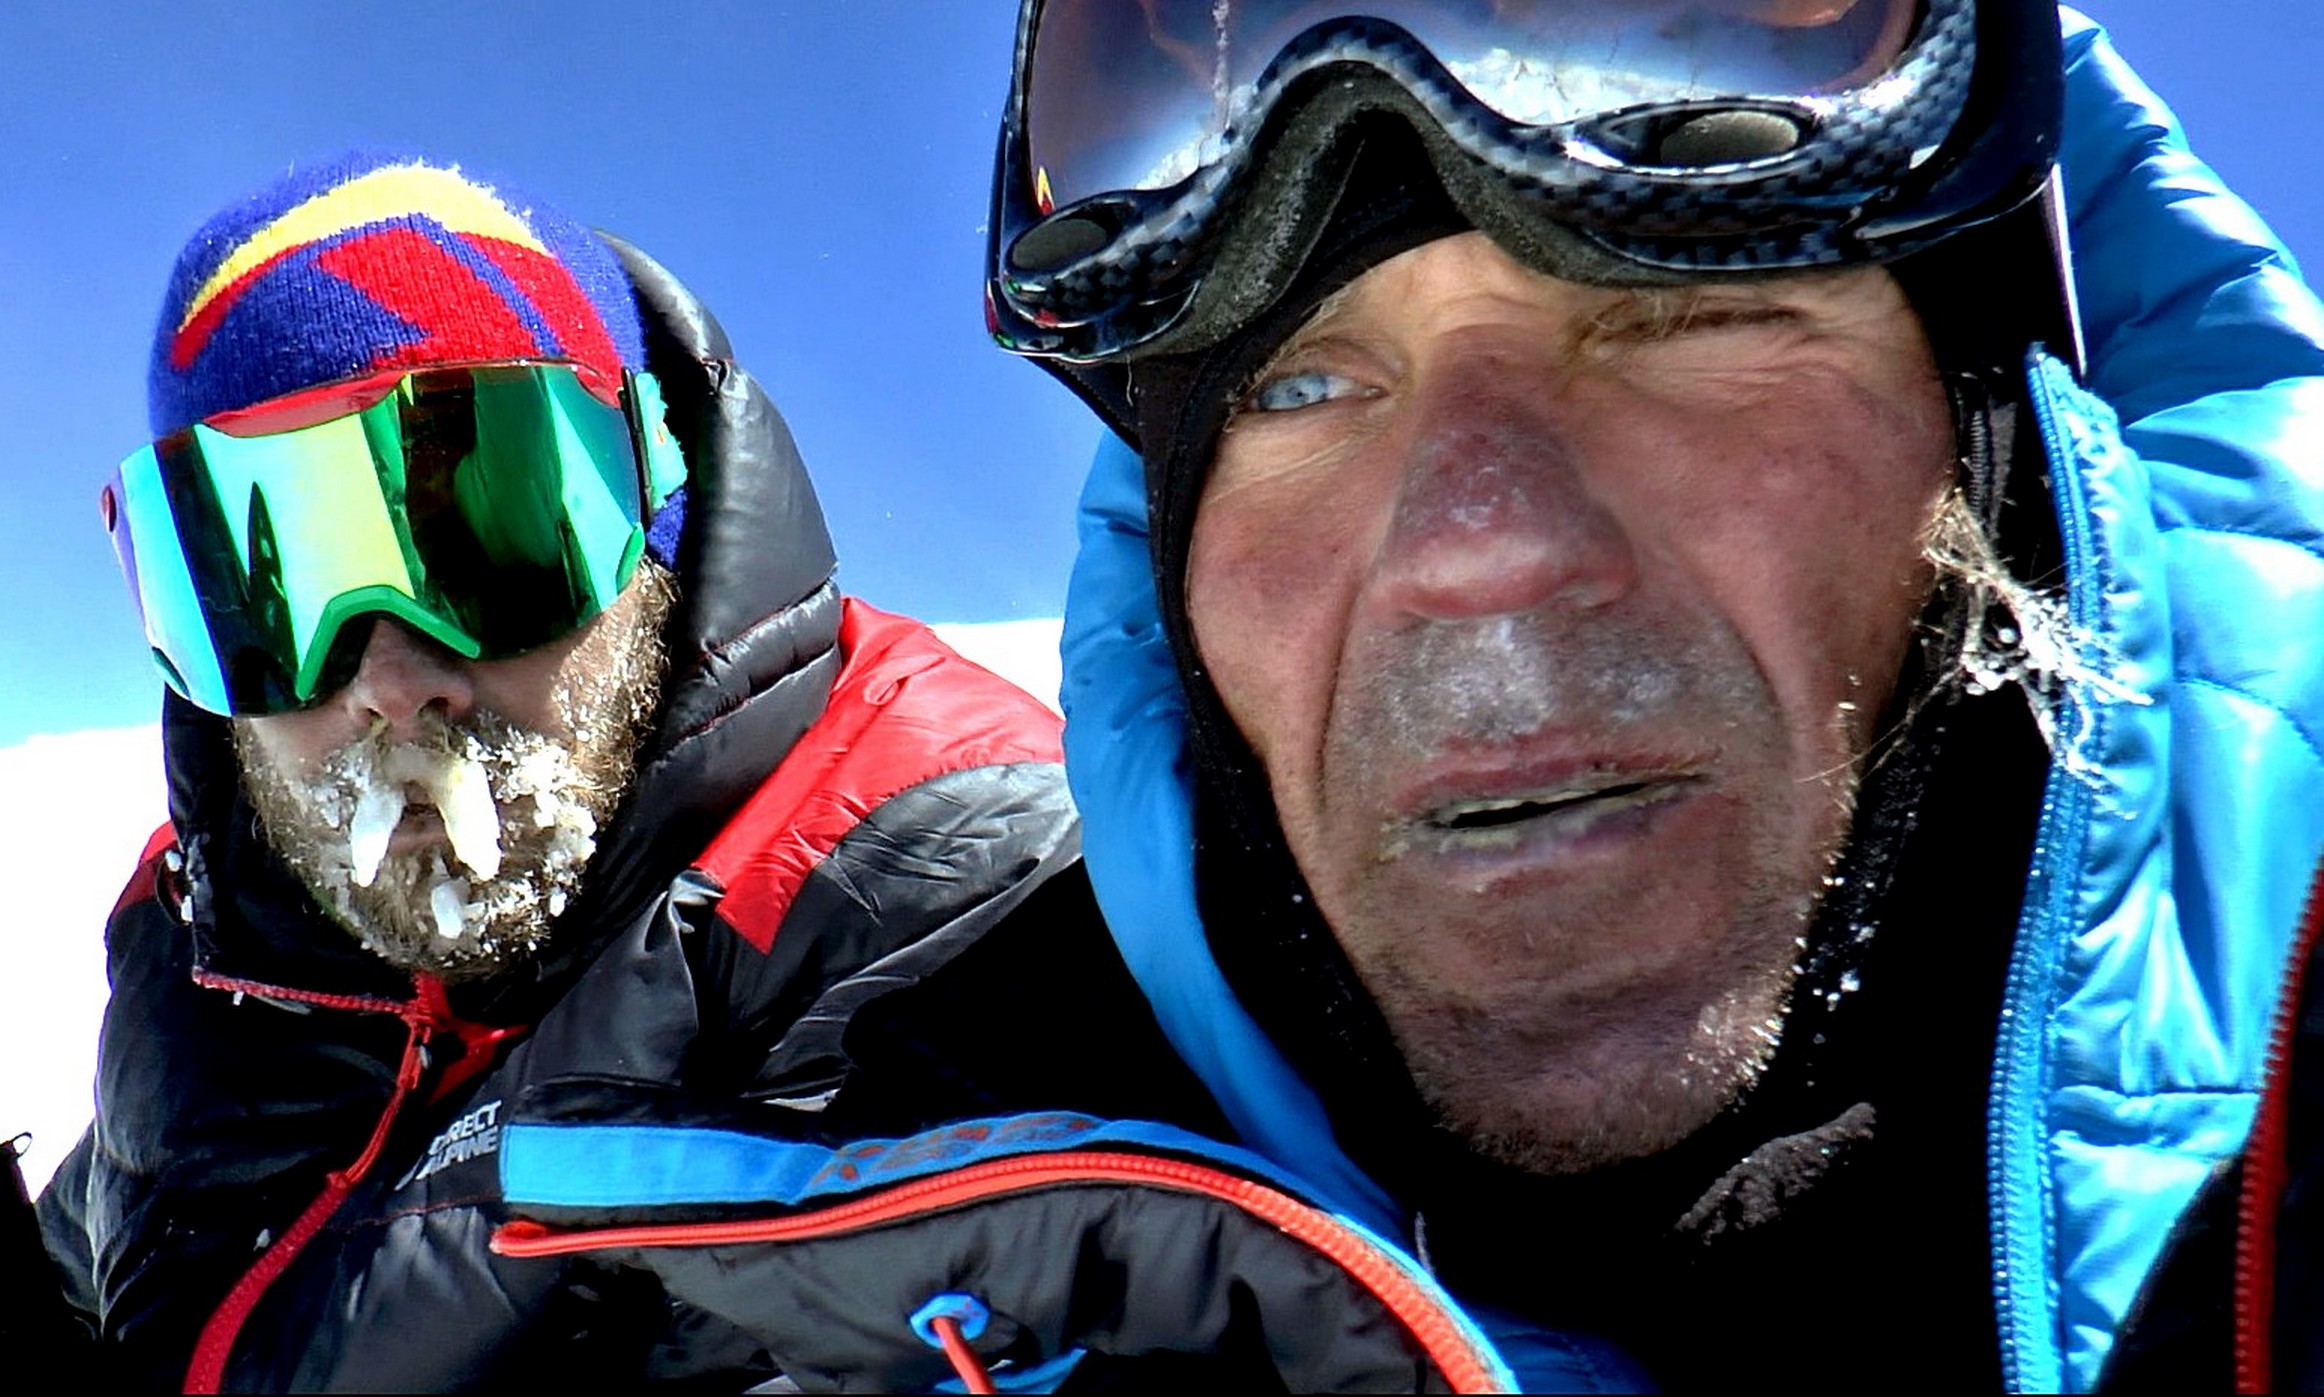 Hak, left, and Holecek, shattered on the summit. [Photo] Marek Holecek